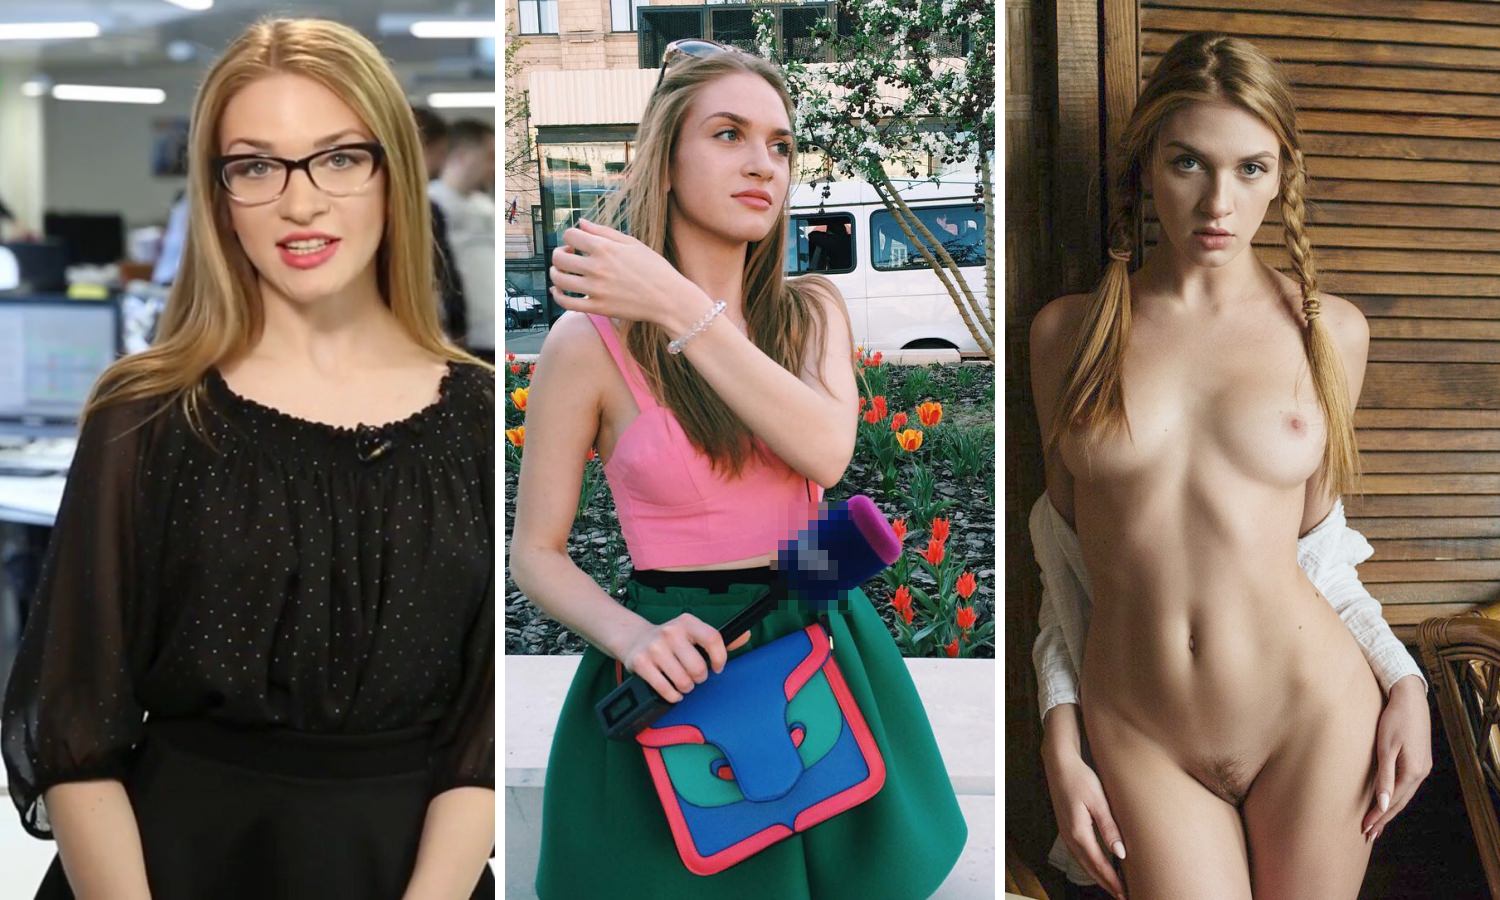 Sofia news reporter and model Porn Pic - EPORNER